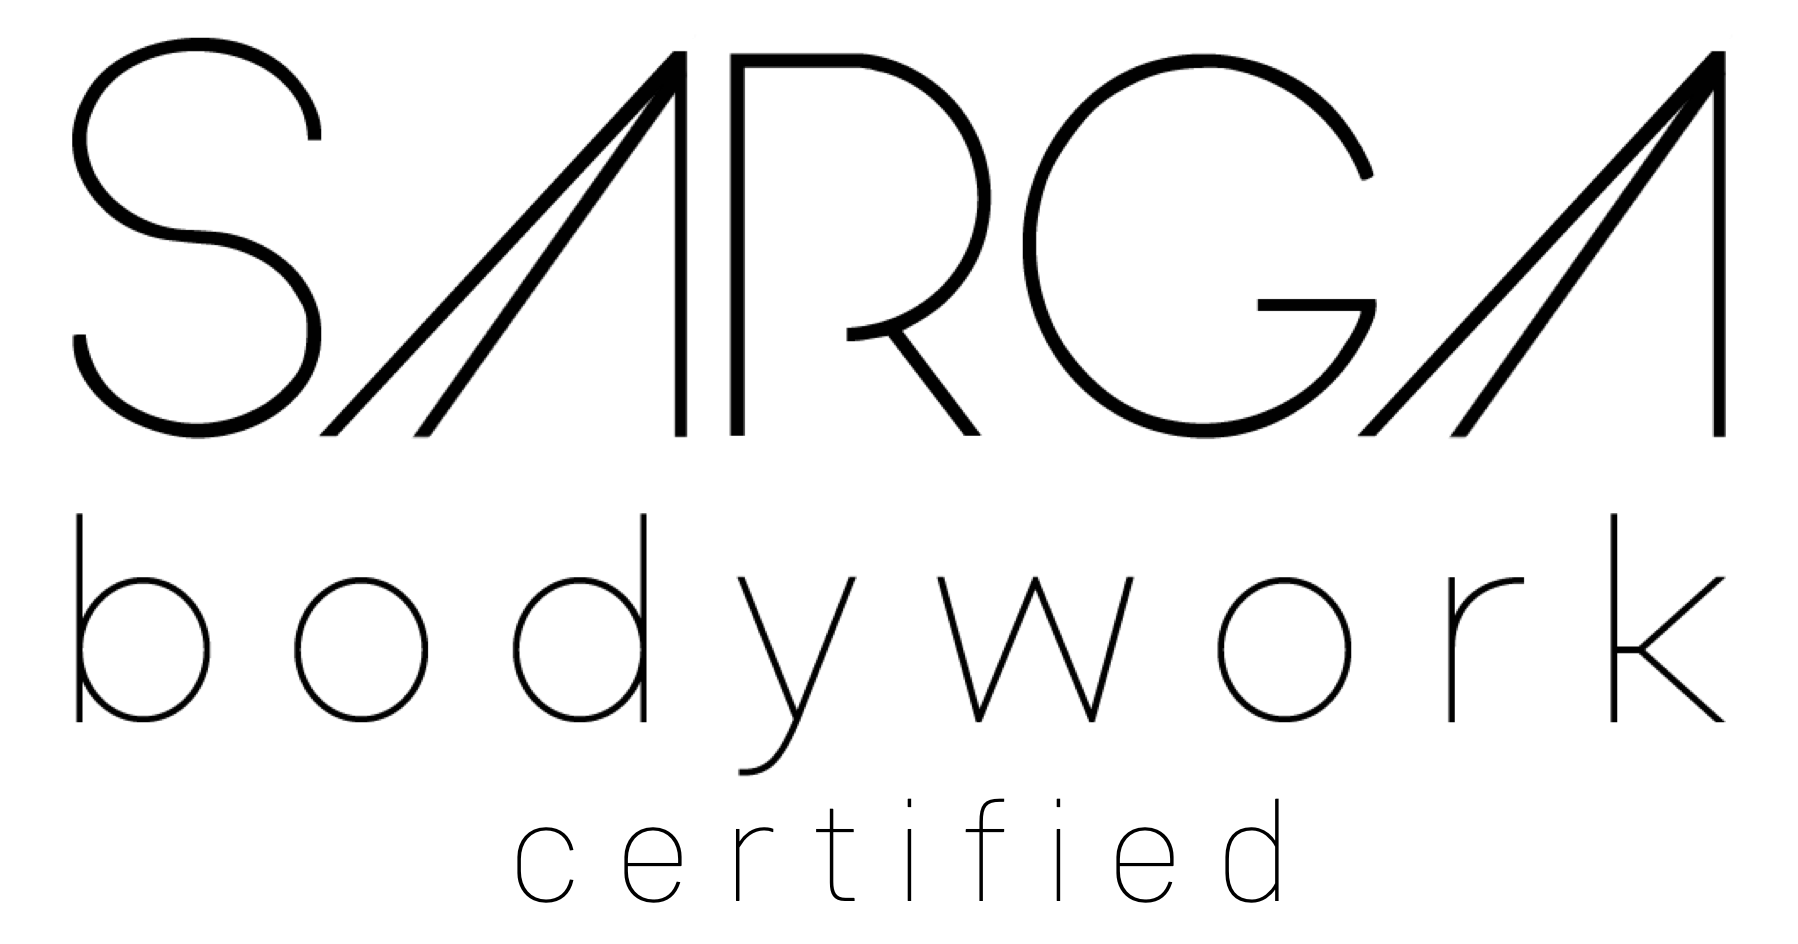 Sarga Bodywork Certified